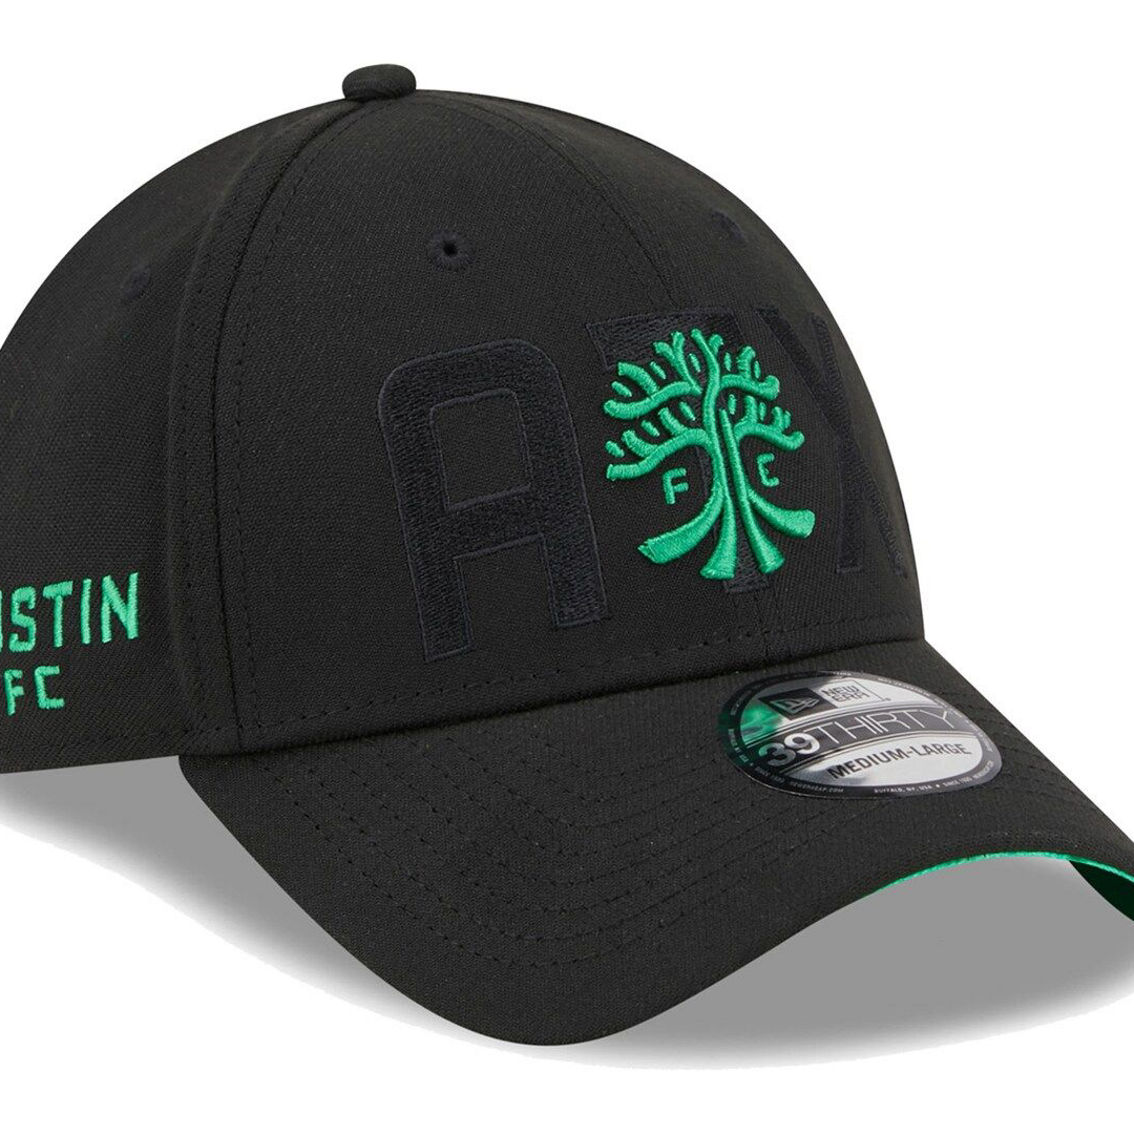 New Era Men's Black Austin FC Kick Off 39THIRTY Flex Hat - Image 2 of 4